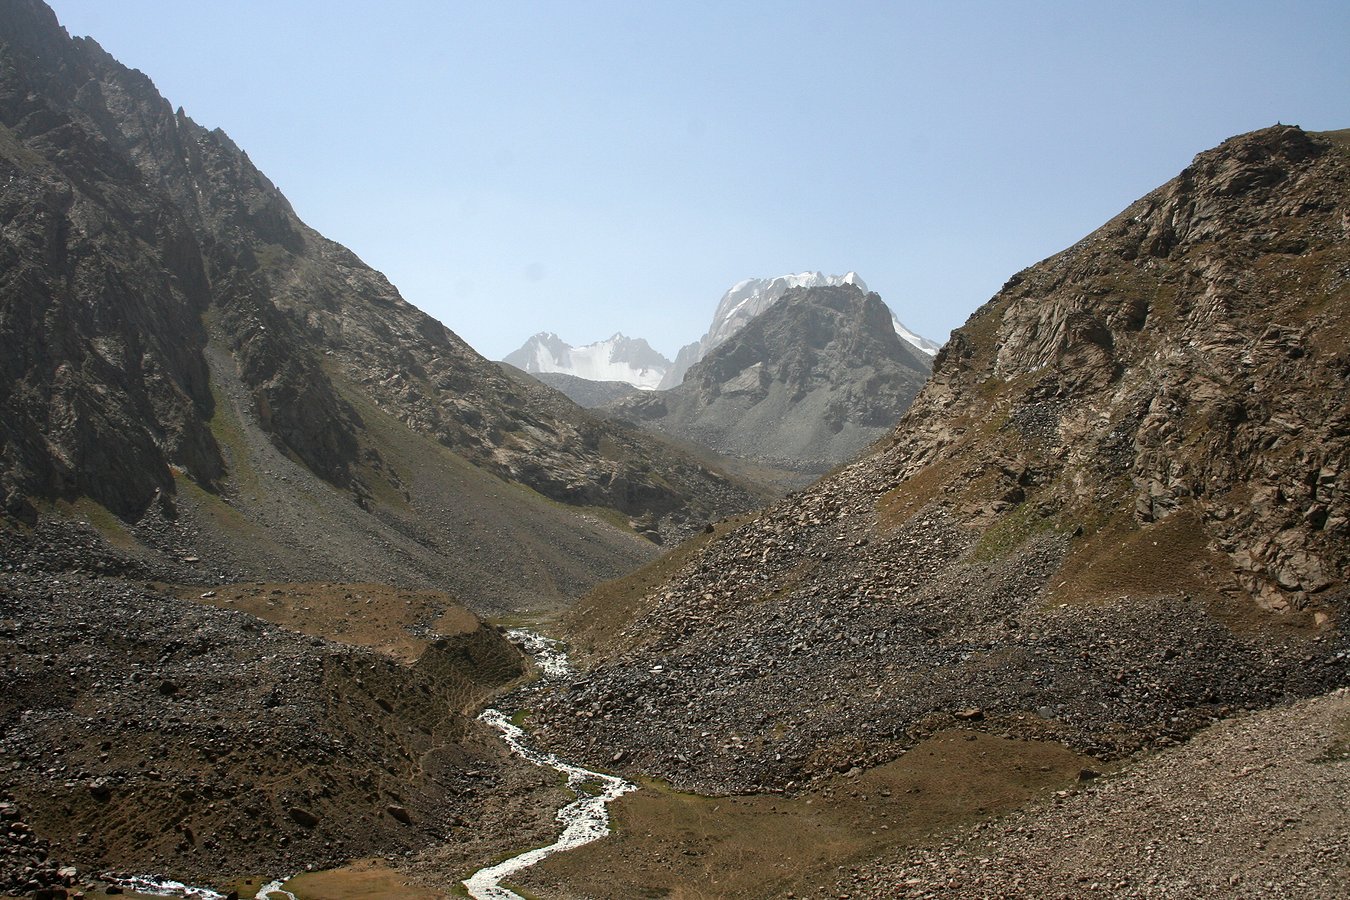 Бардара, image of landscape/habitat.